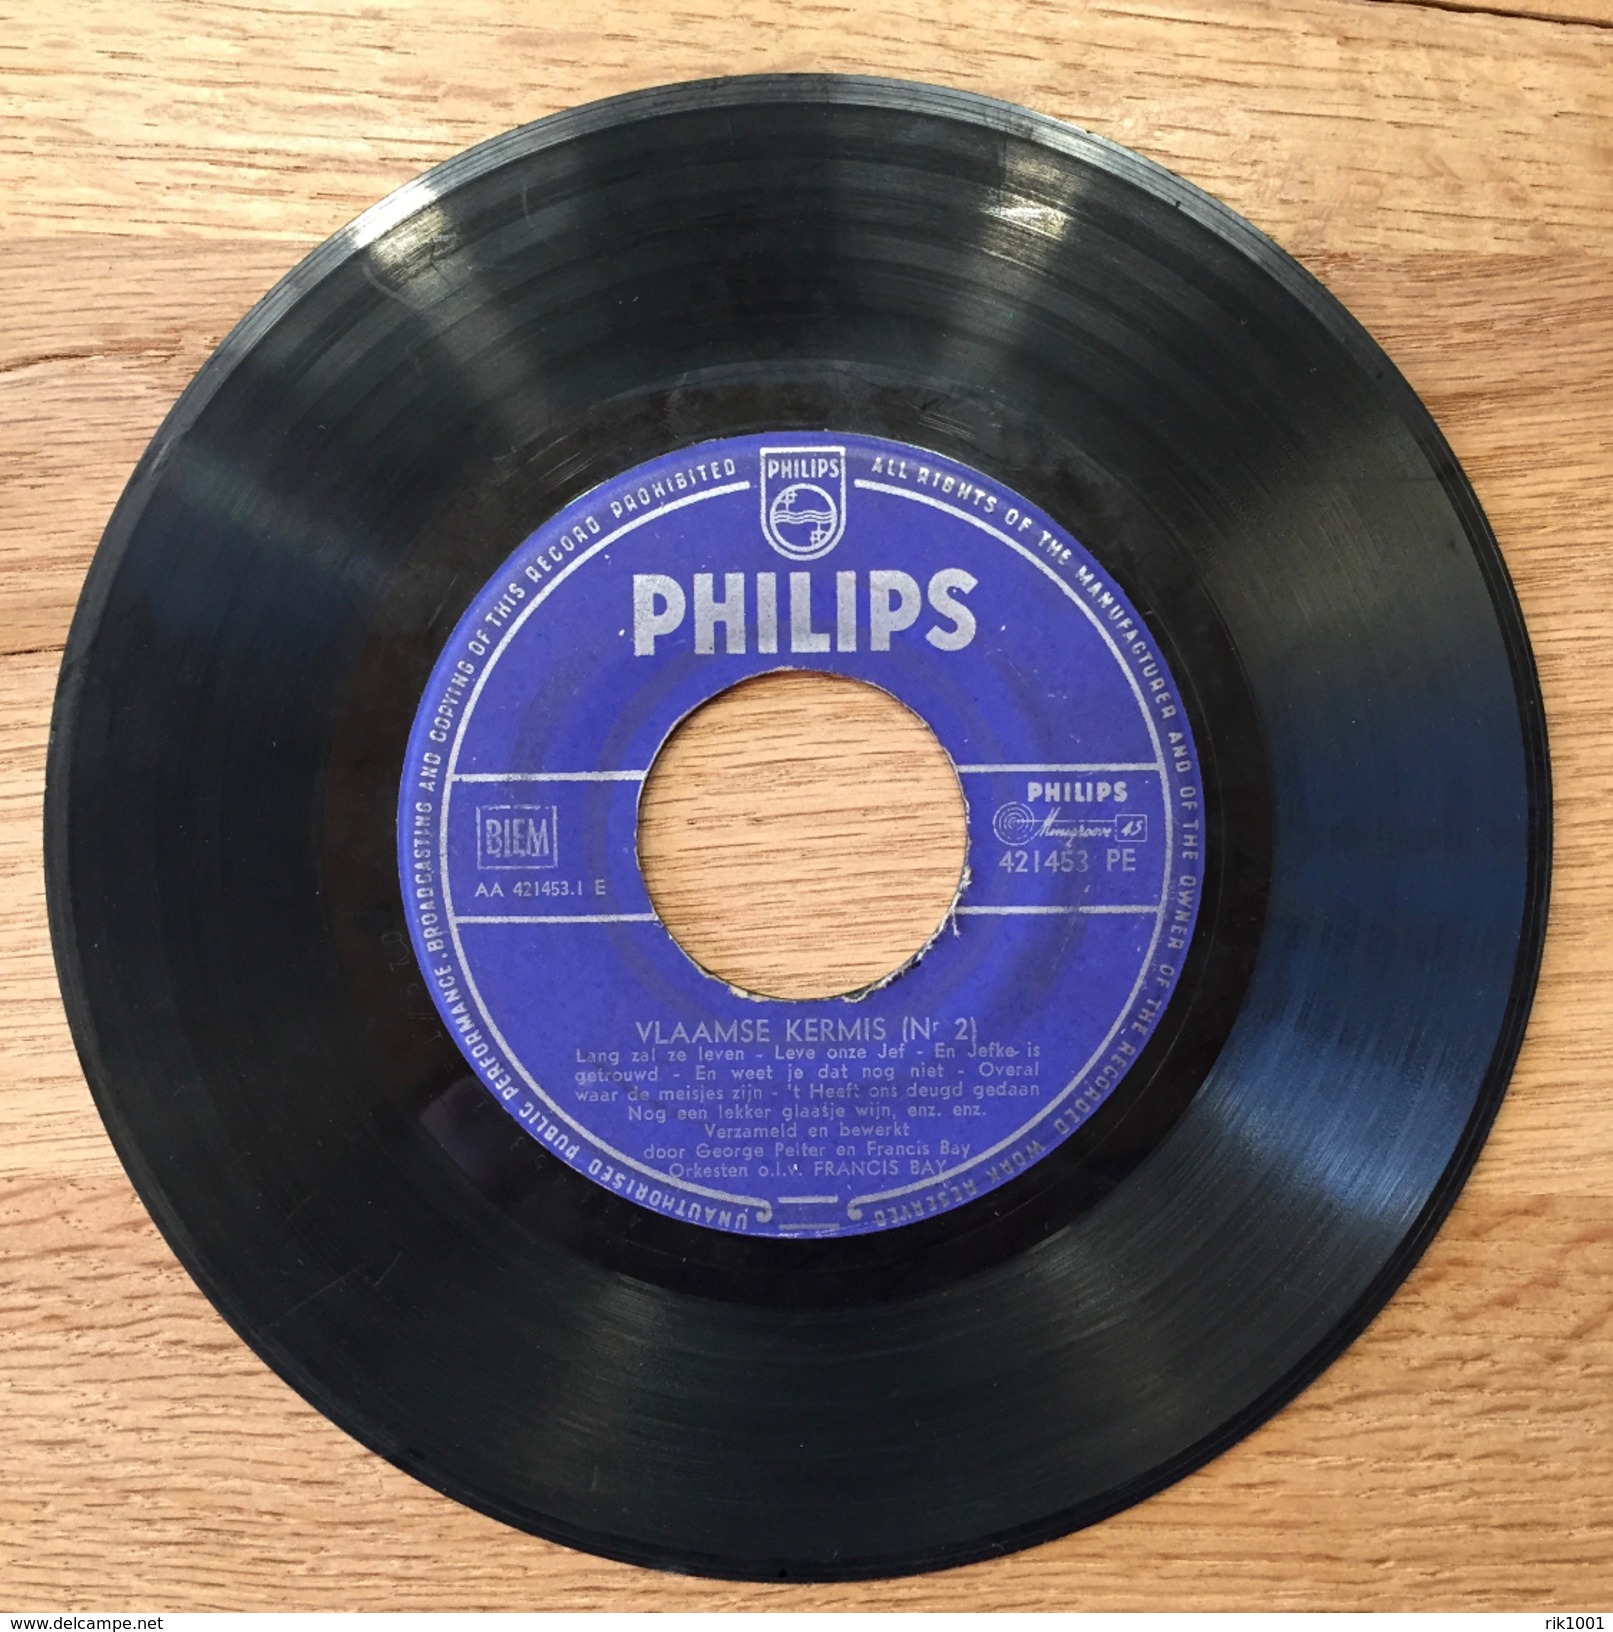 7" Single, 45rpm, George Pelter En Francis Bay, "Vlaamse Kermis" - Other - Dutch Music